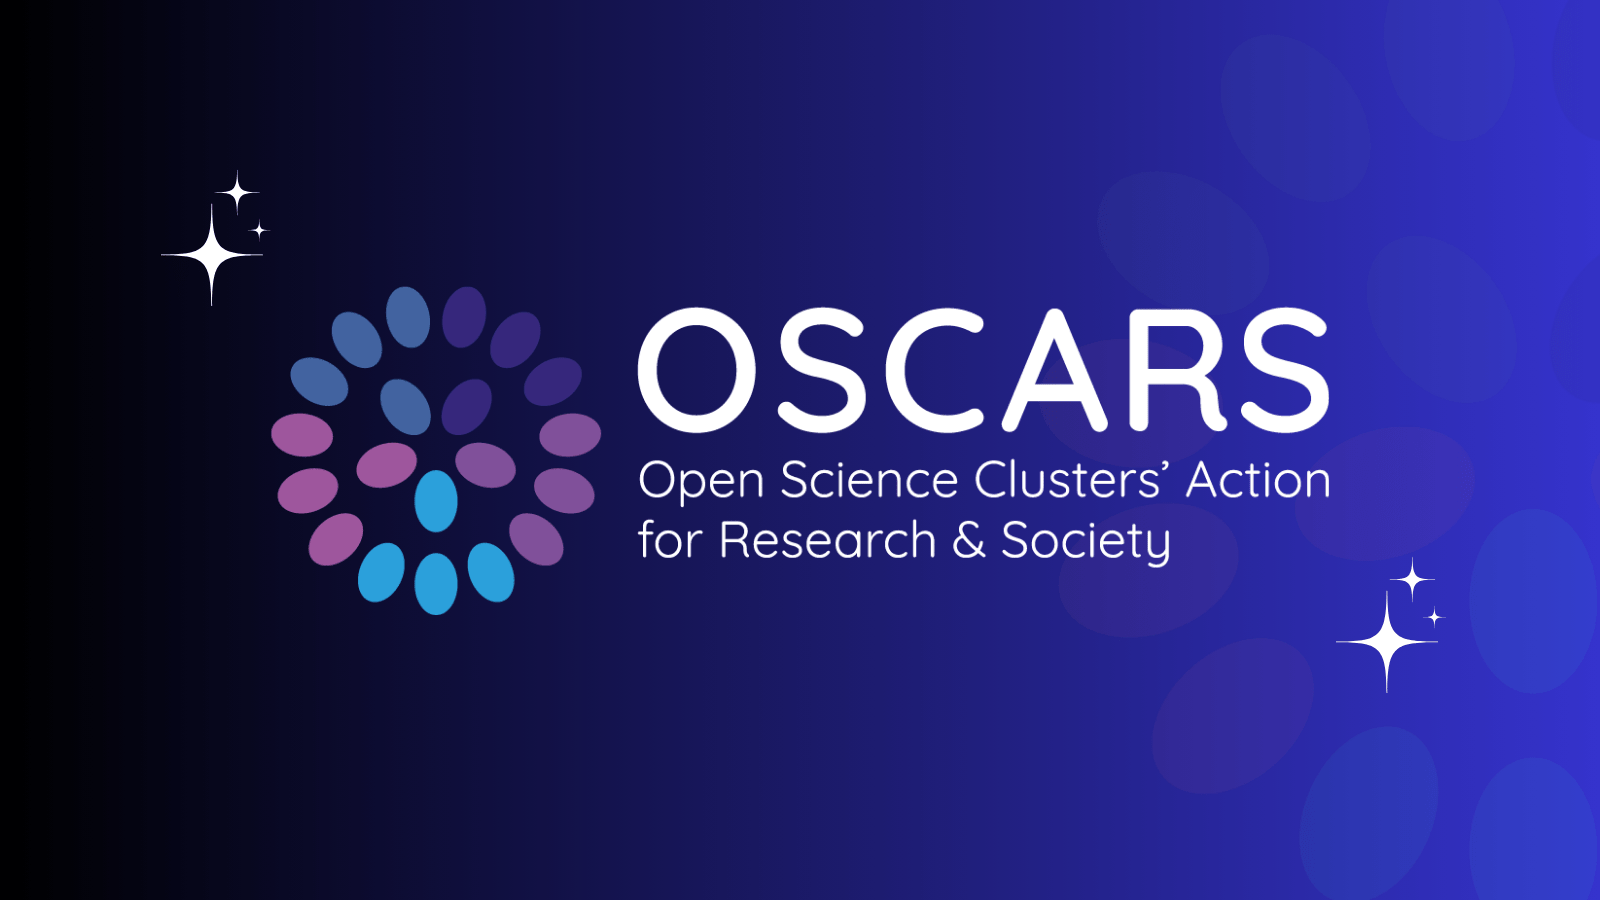 OSCARS 2016 - 88th Academy Awards Nominations [HD] - YouTube